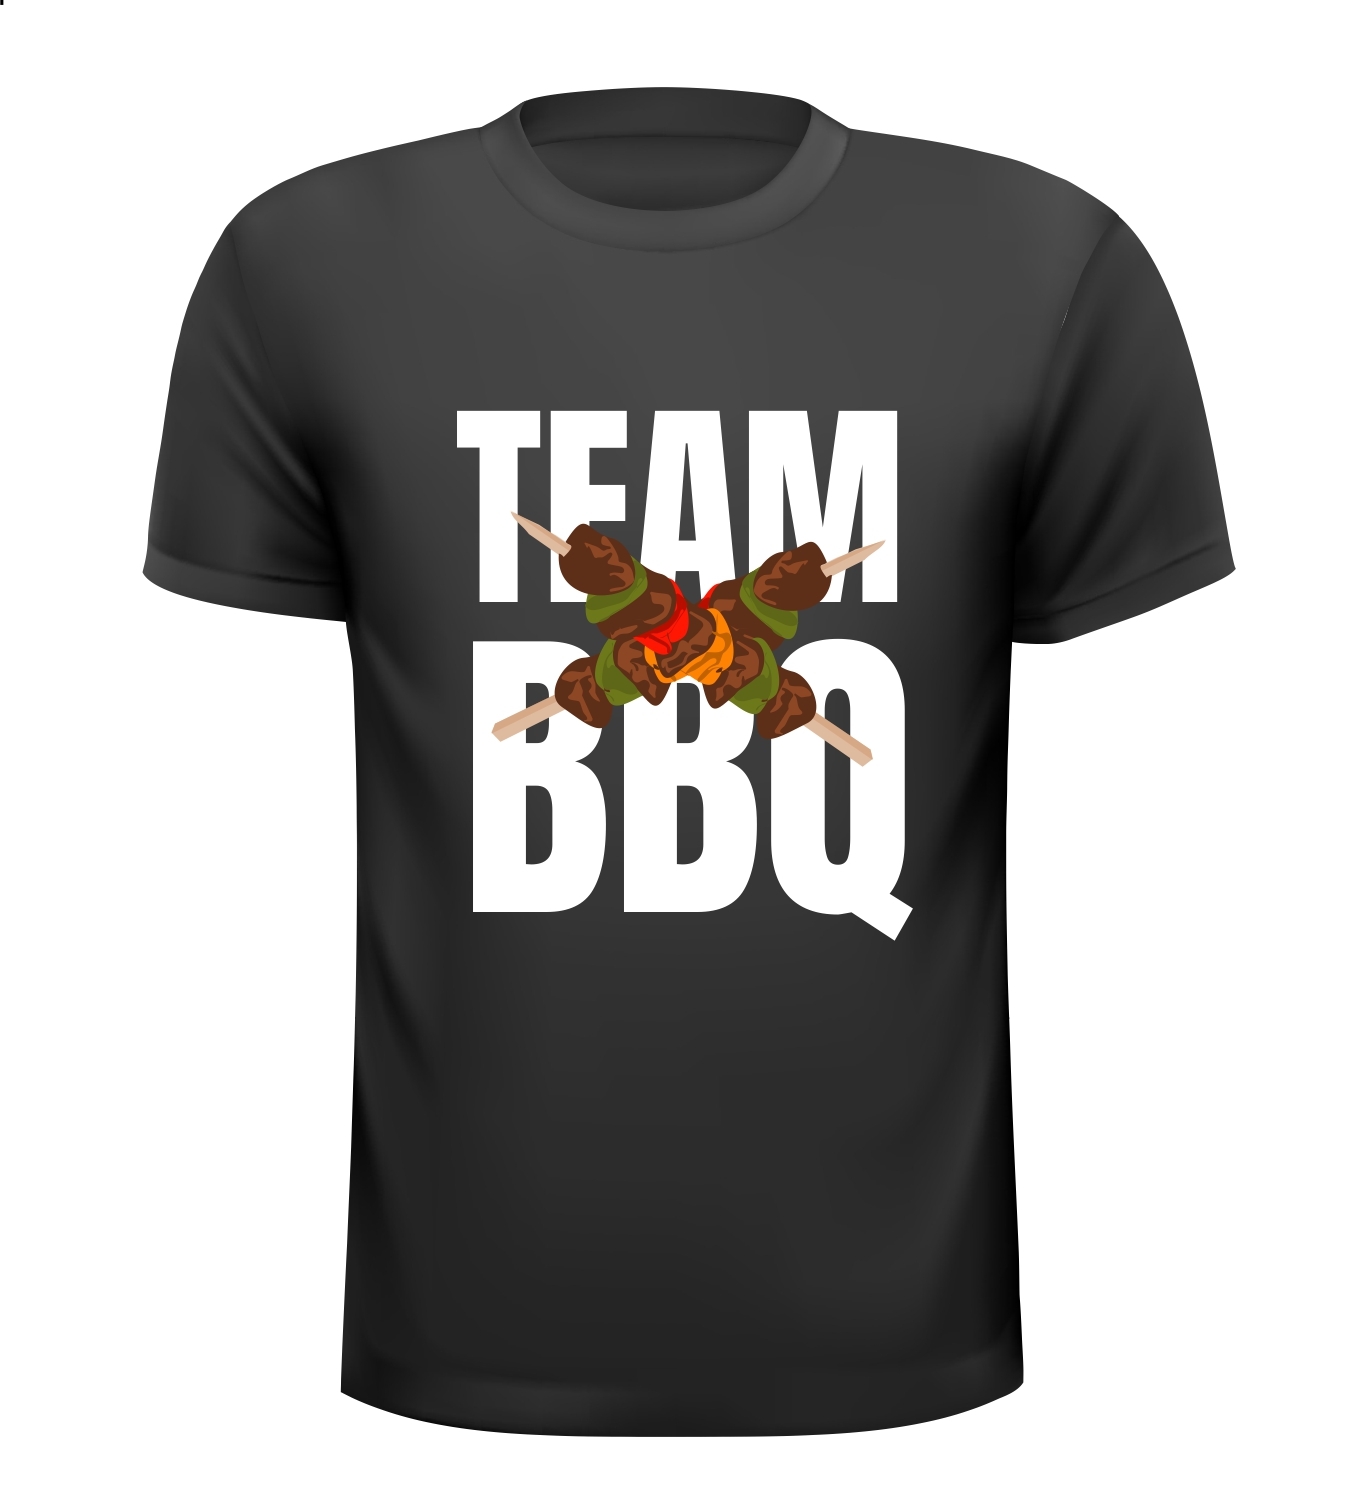 Shirtje voor team barbecue